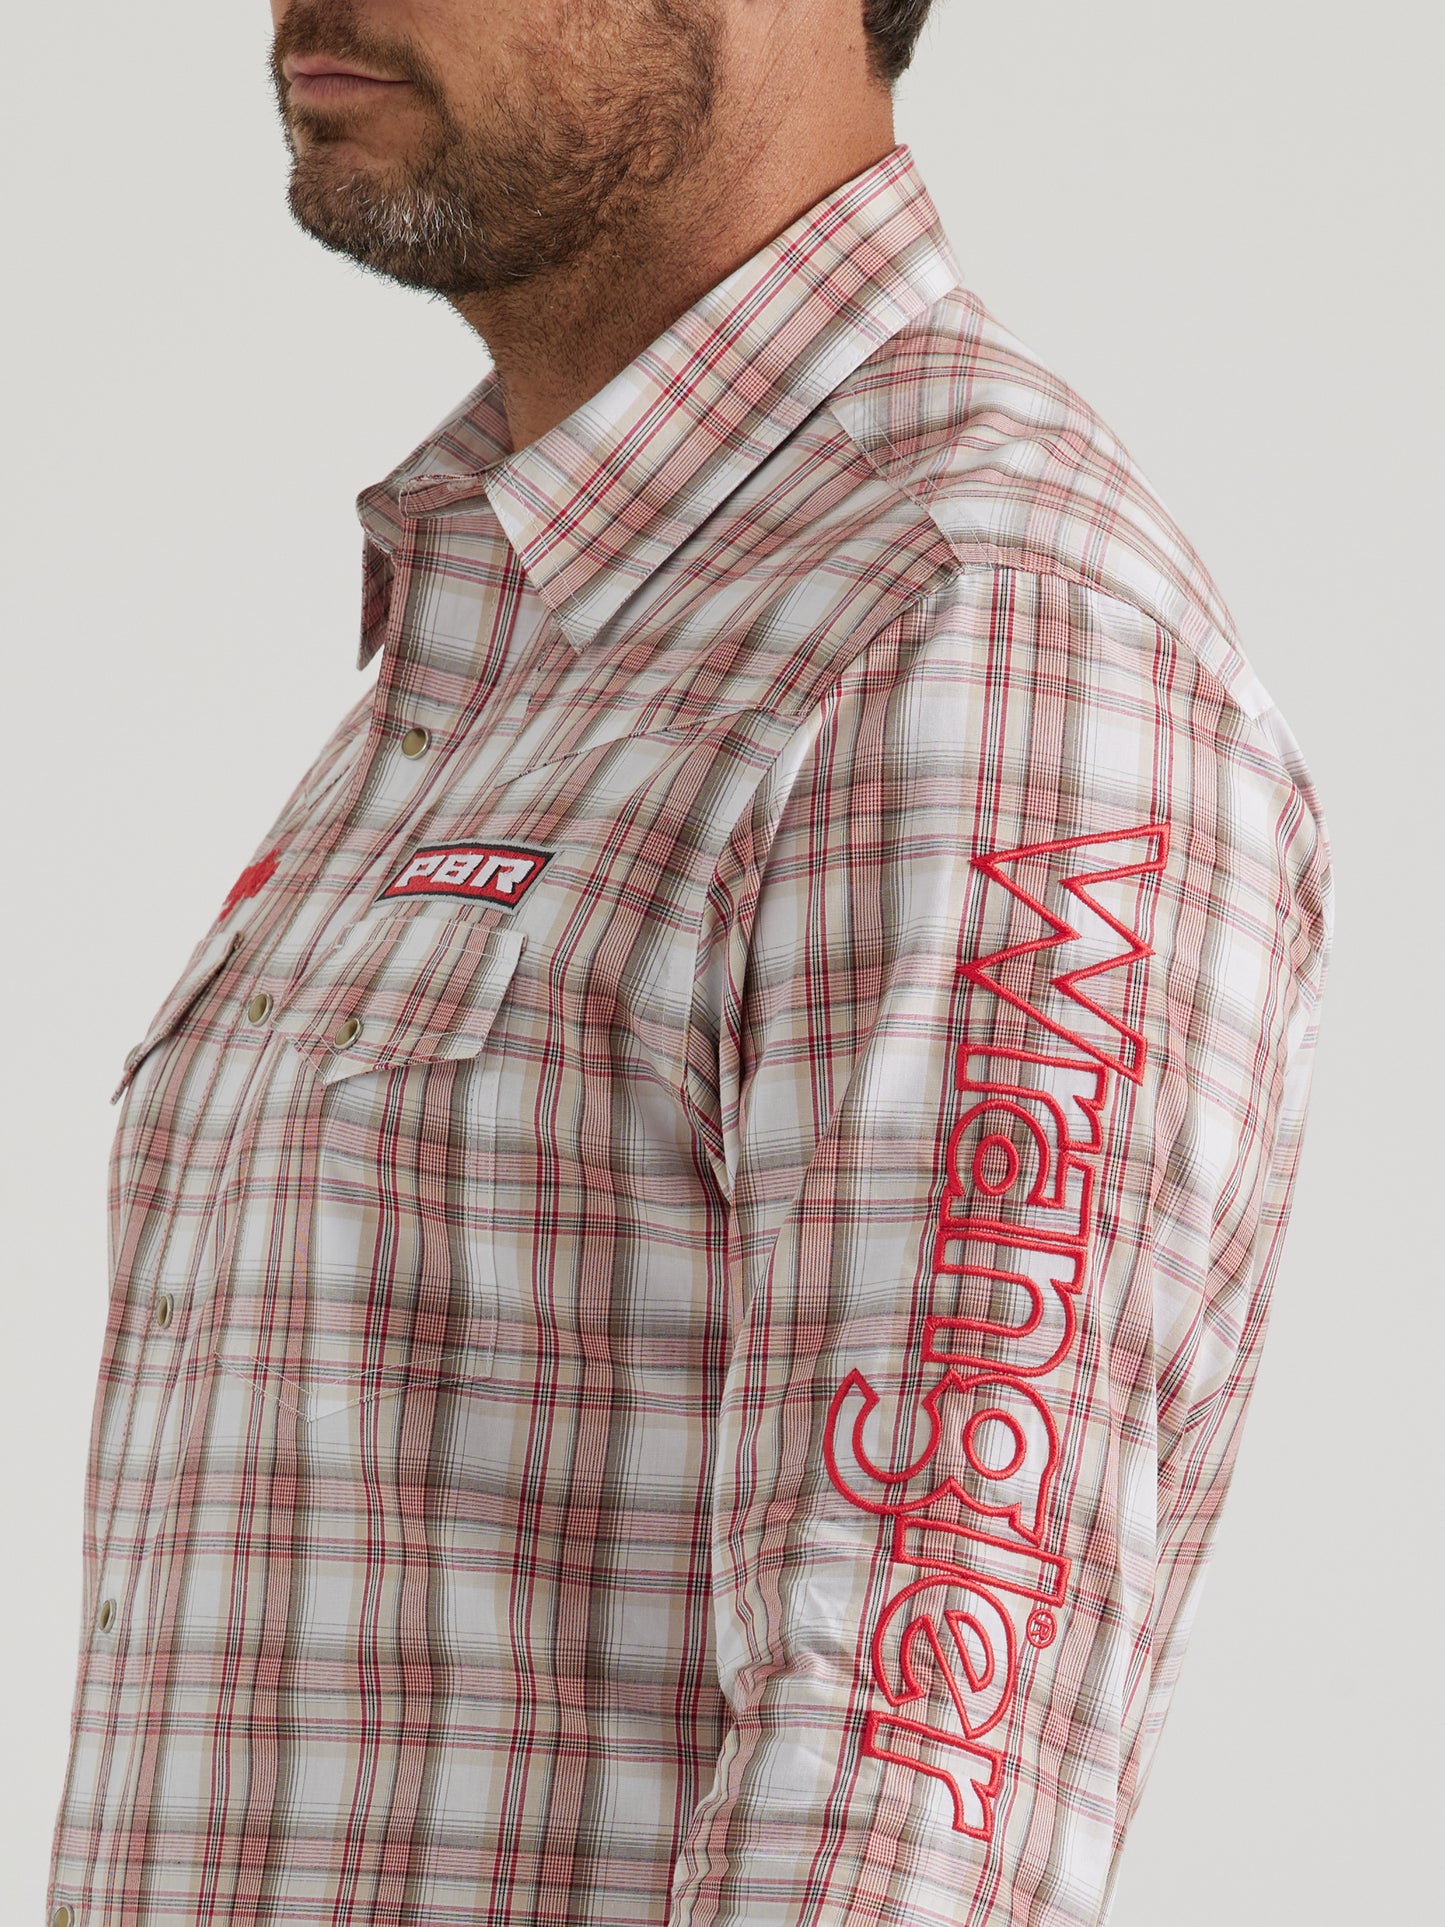 Wrangler PBR Logo Long Sleeve Plaid Western Snap Shirt